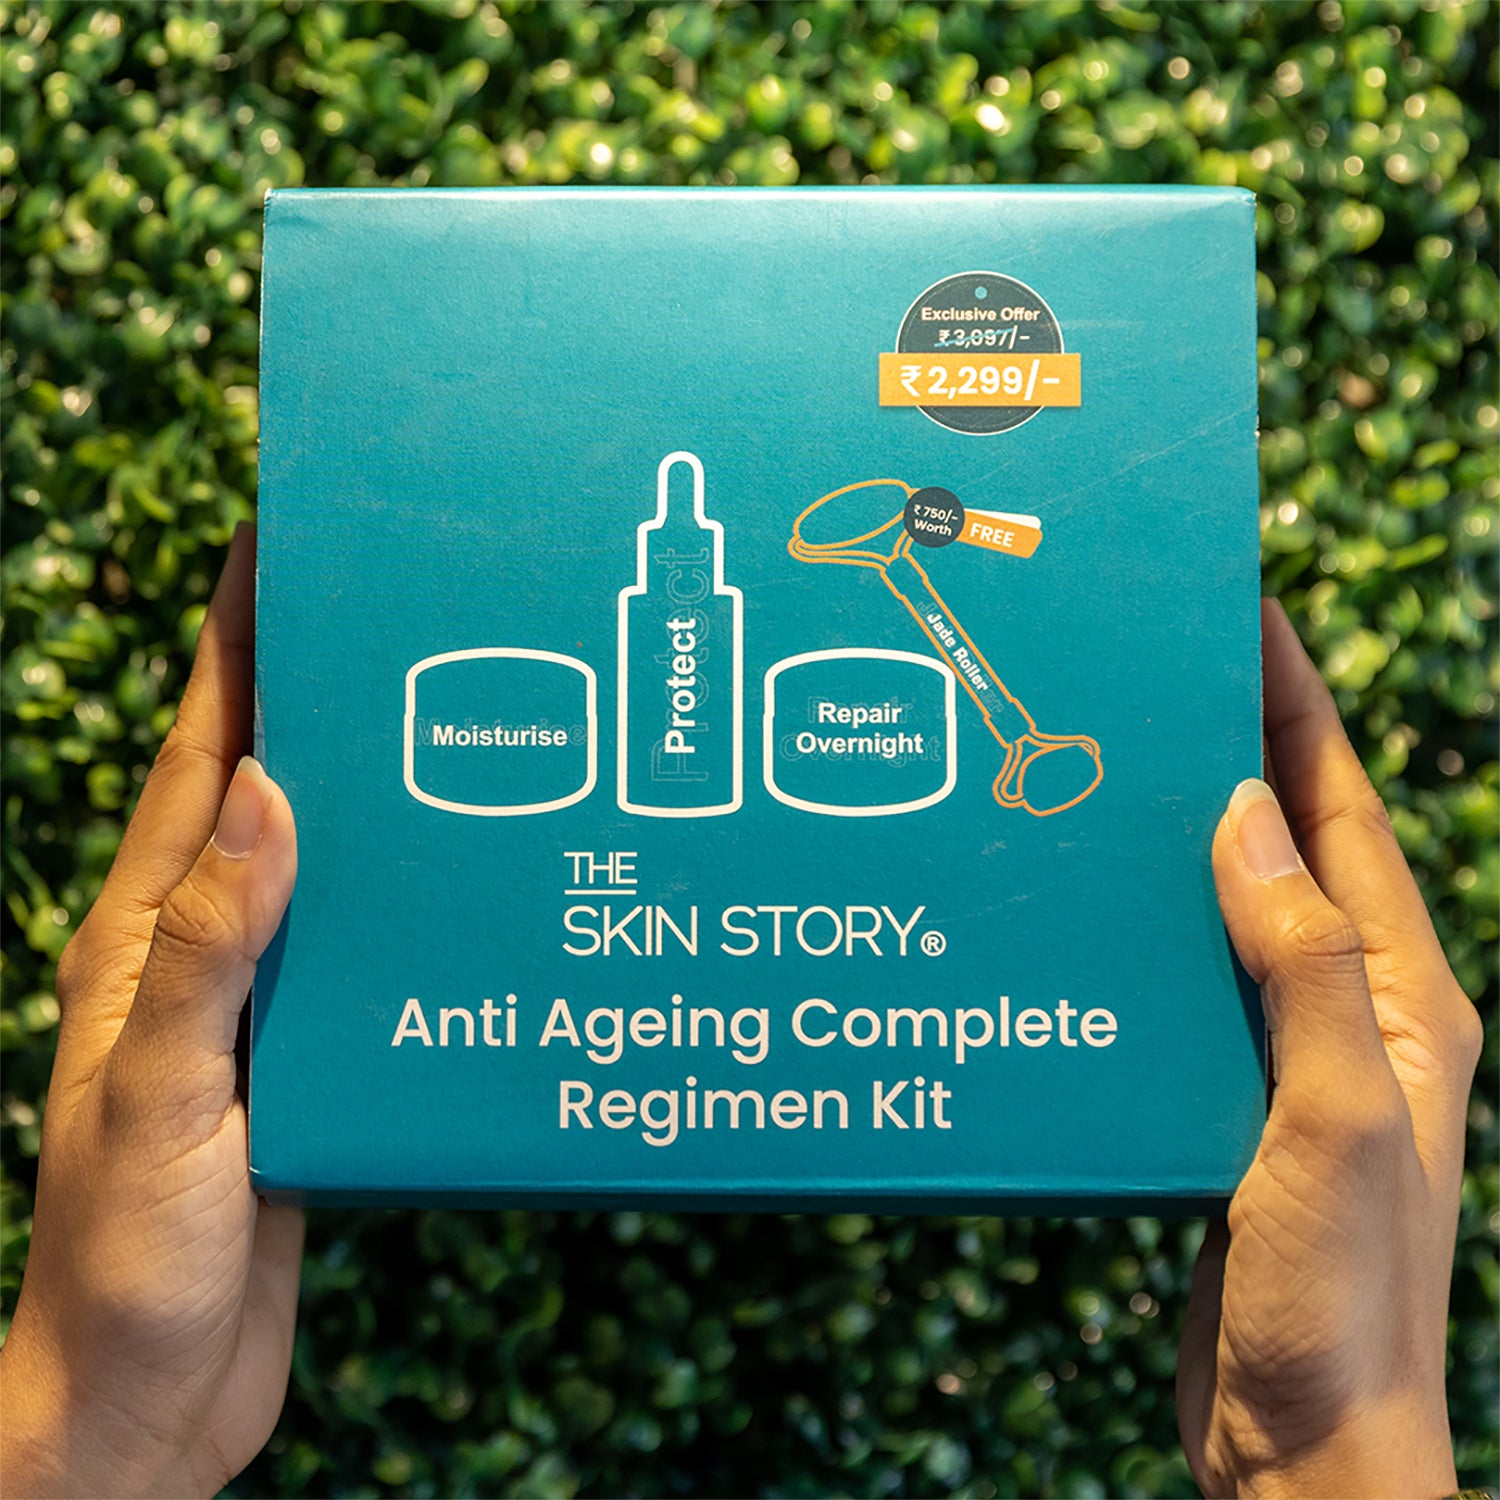 Anti Ageing Complete Regimen Kit